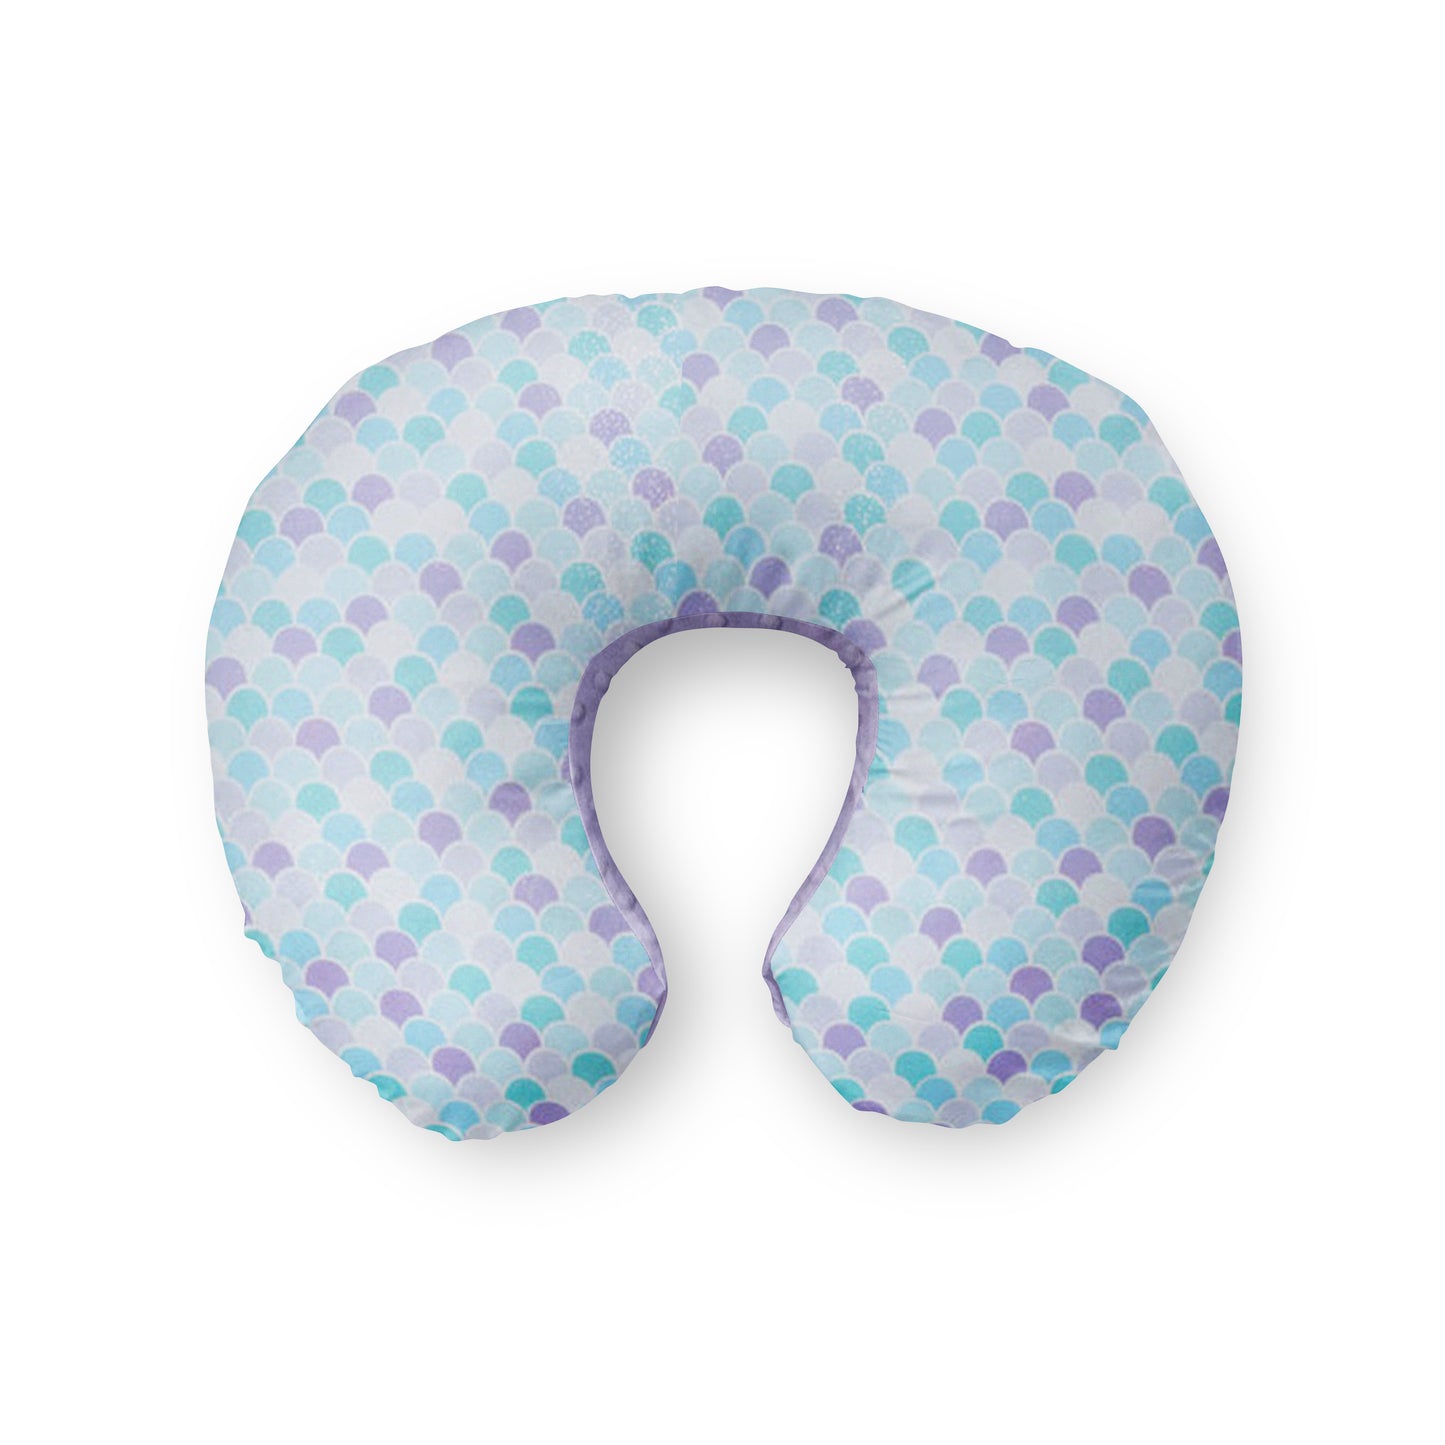 Nursing pillow cover. Mermaid lavender baby nursery